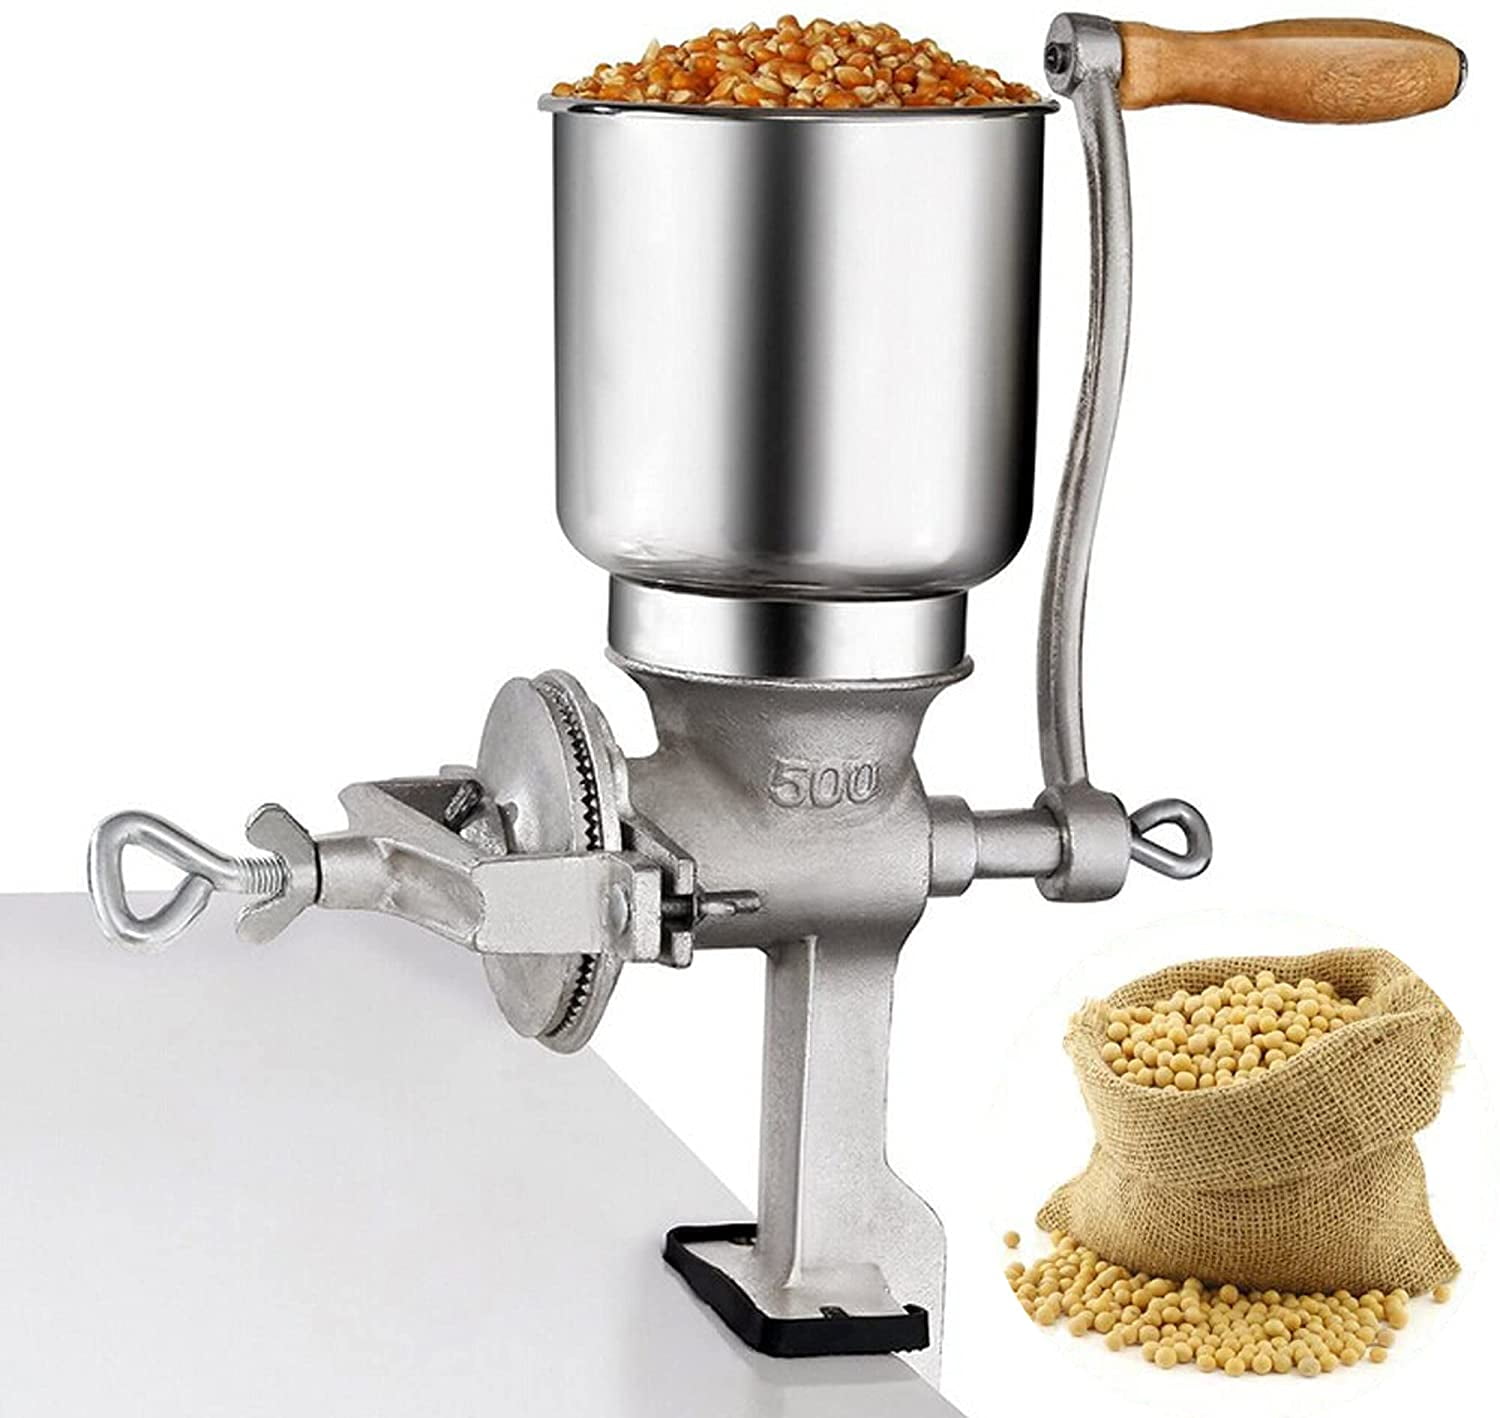  GRASARY Manual Nut Grinder Ergonomic Long Handle Nut